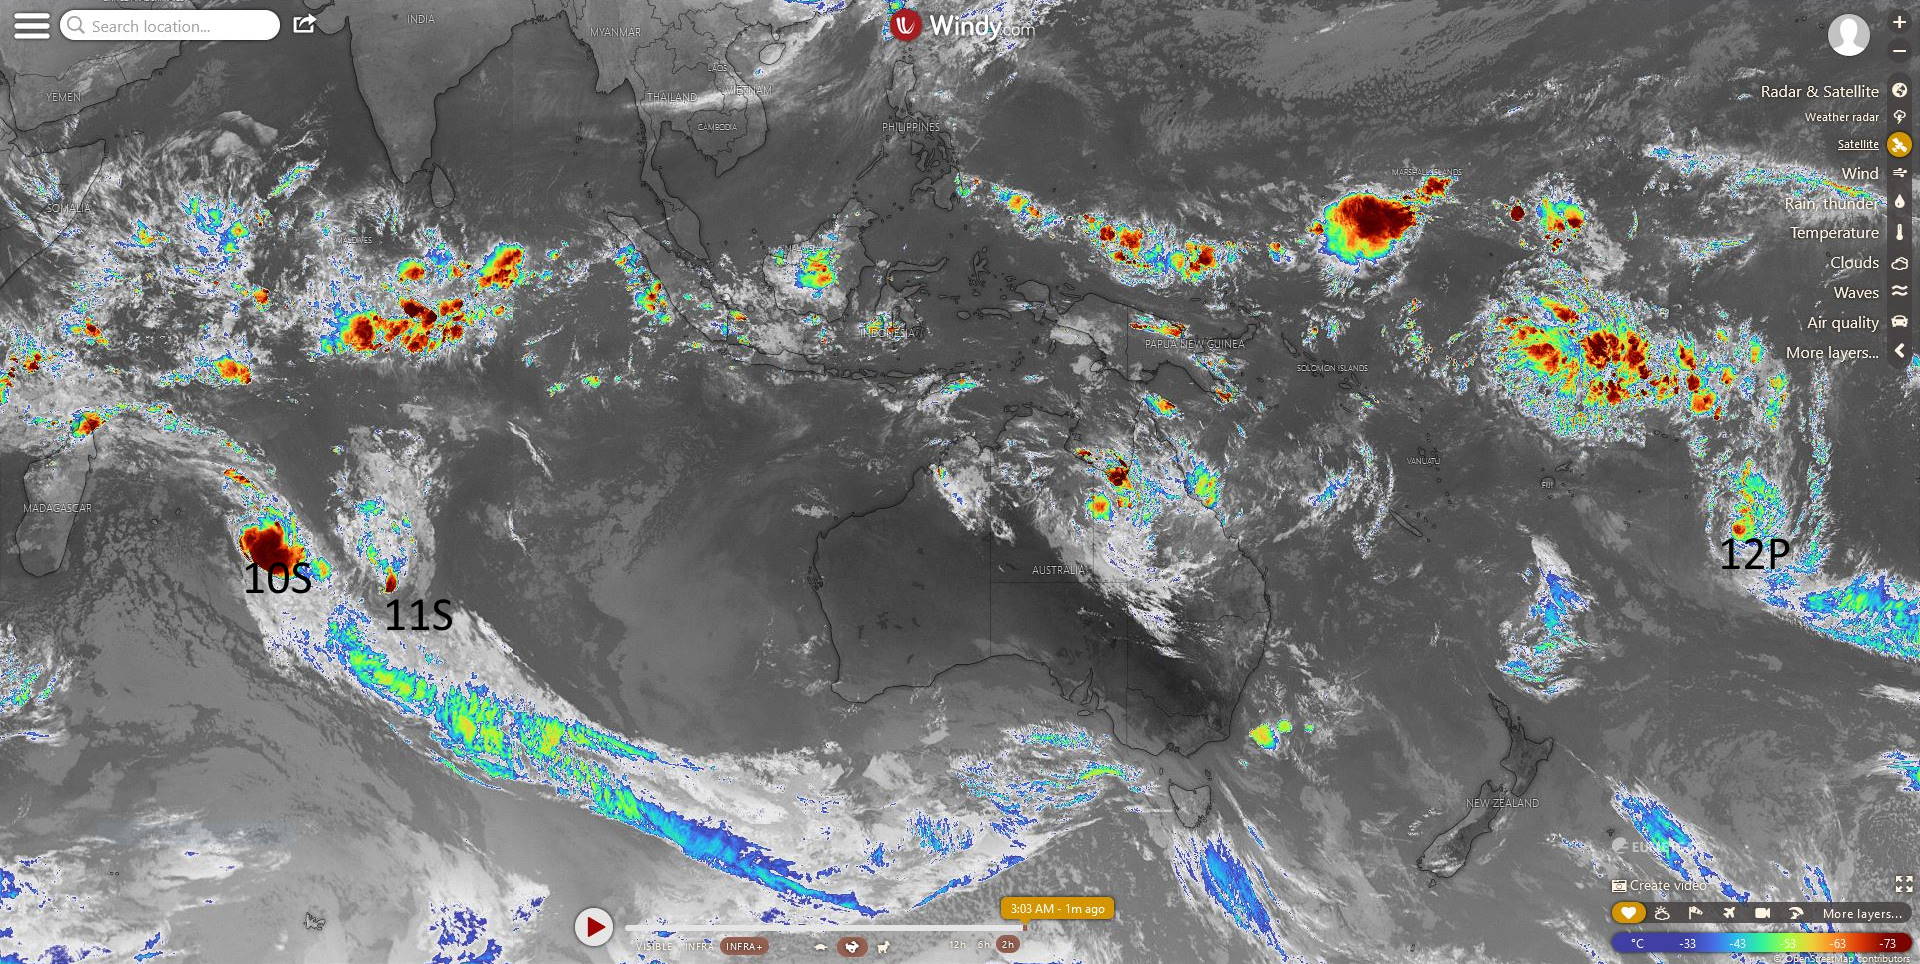 Southern Hemisphere cyclonic trio: 10S(DIANE), 11S(ESAMI), 12P: updates